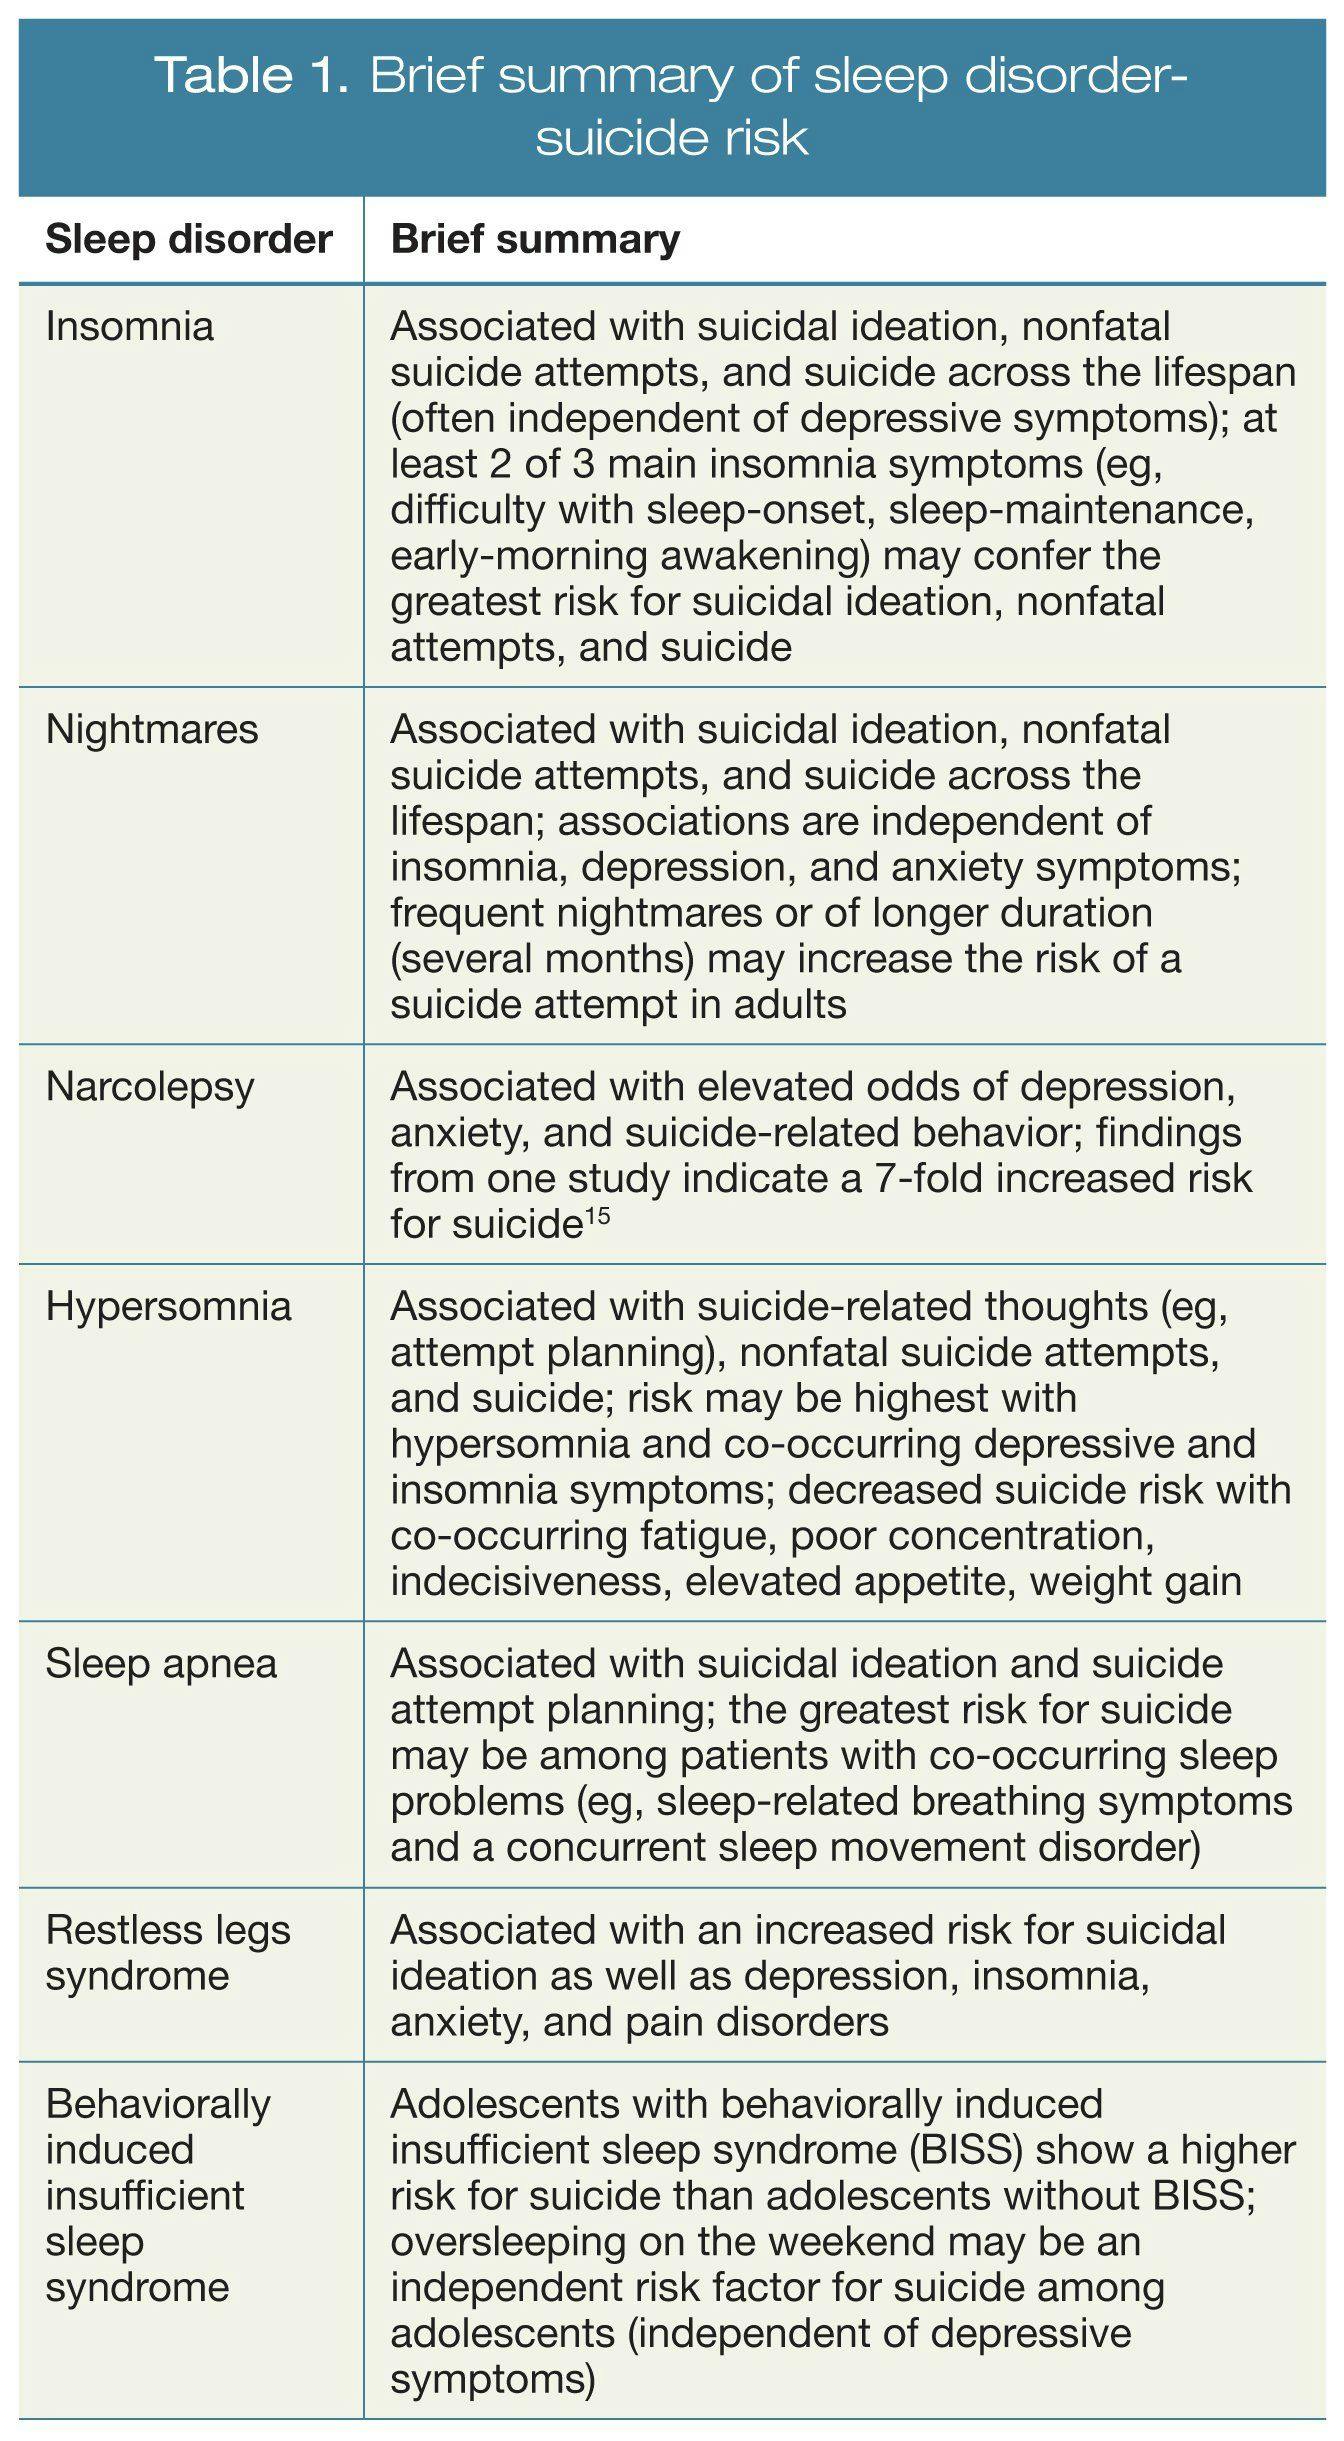 Brief summary of sleep disorder - suicide risk